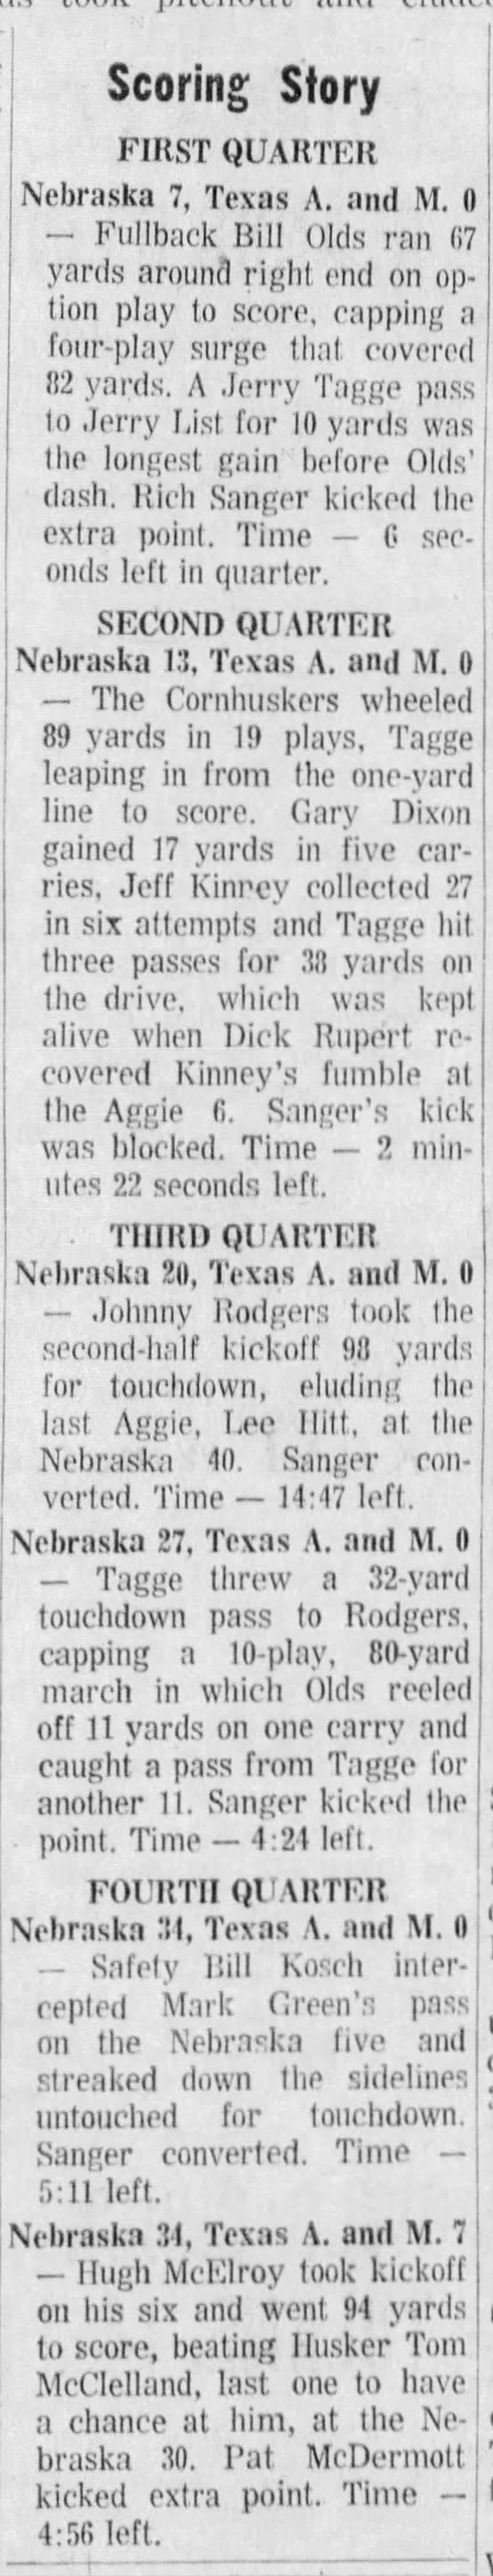 1971 Nebraska-Texas A&M scoring summary